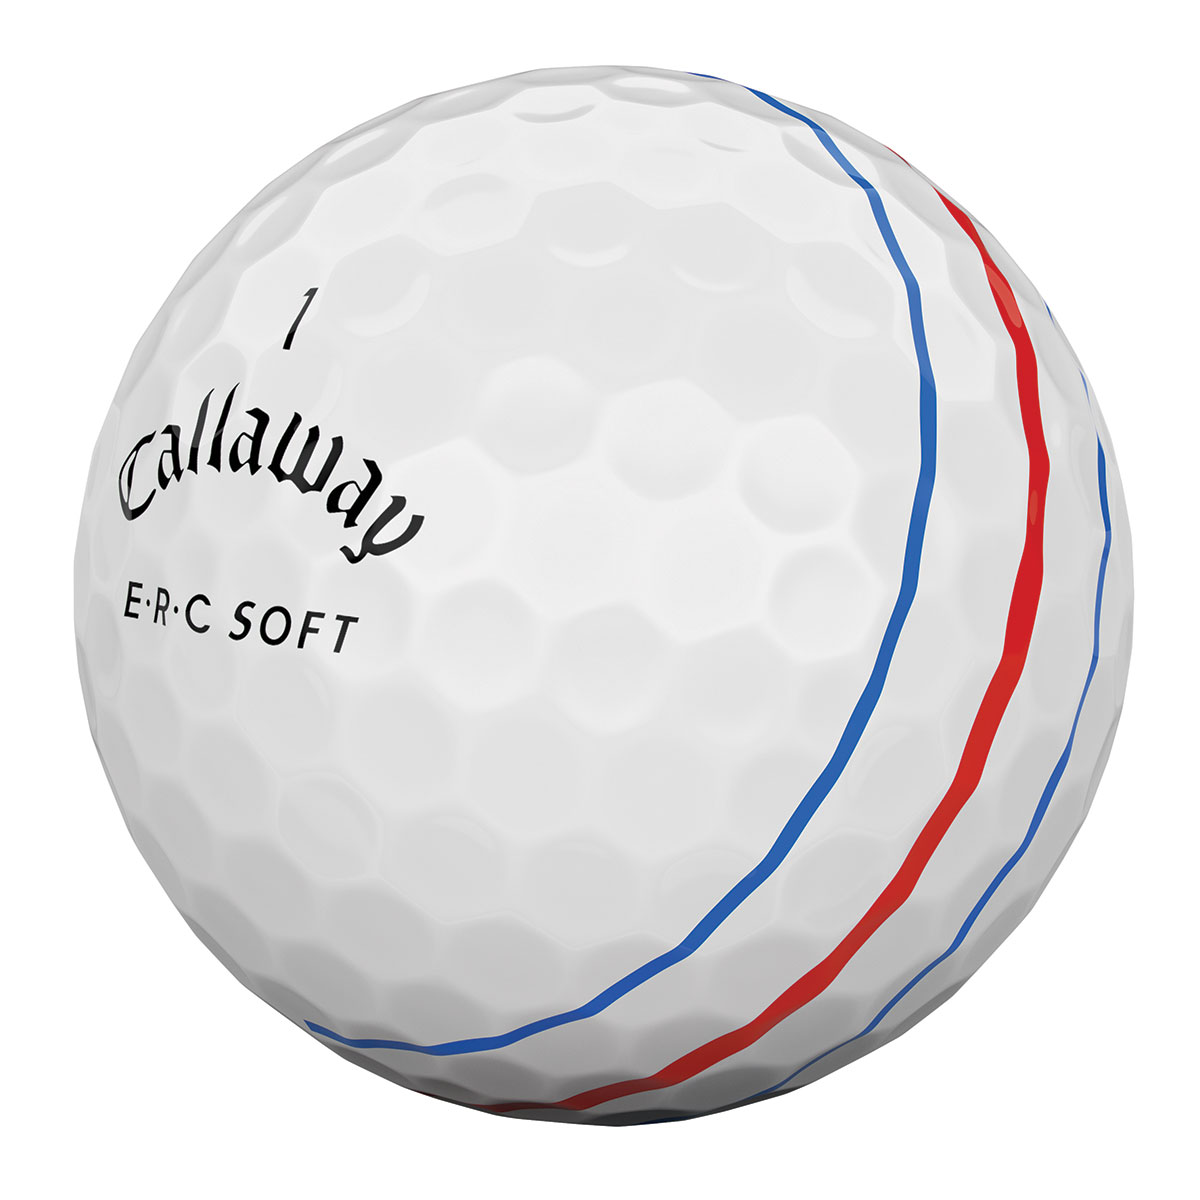 Callaway ERC SOFT Triple Track Lake Balls - Pro Lake Golf Balls | Used